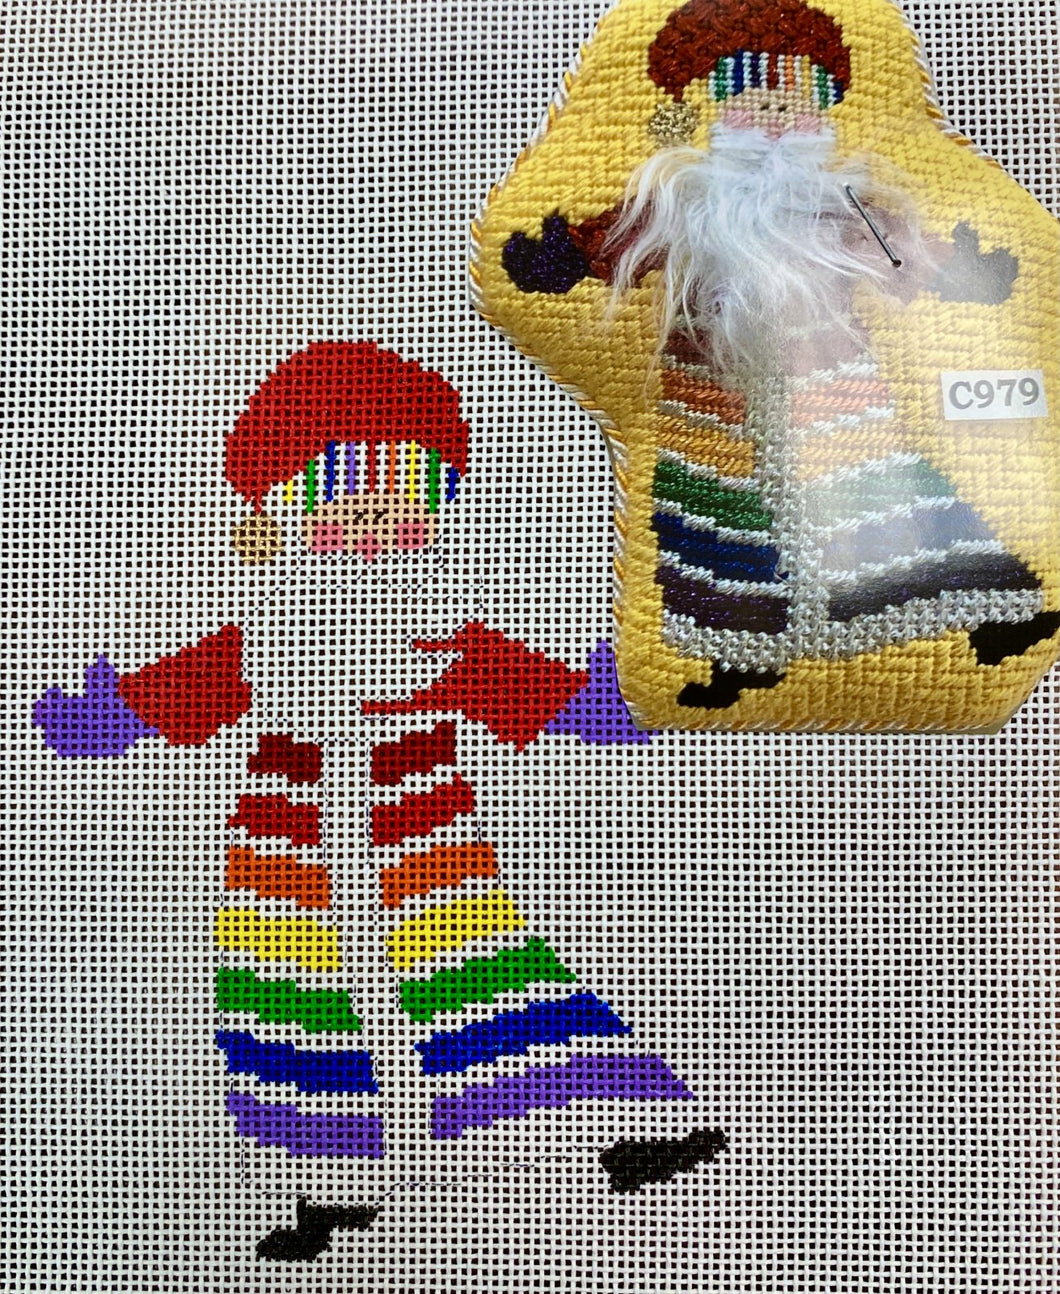 rainbow santa with stitch guide